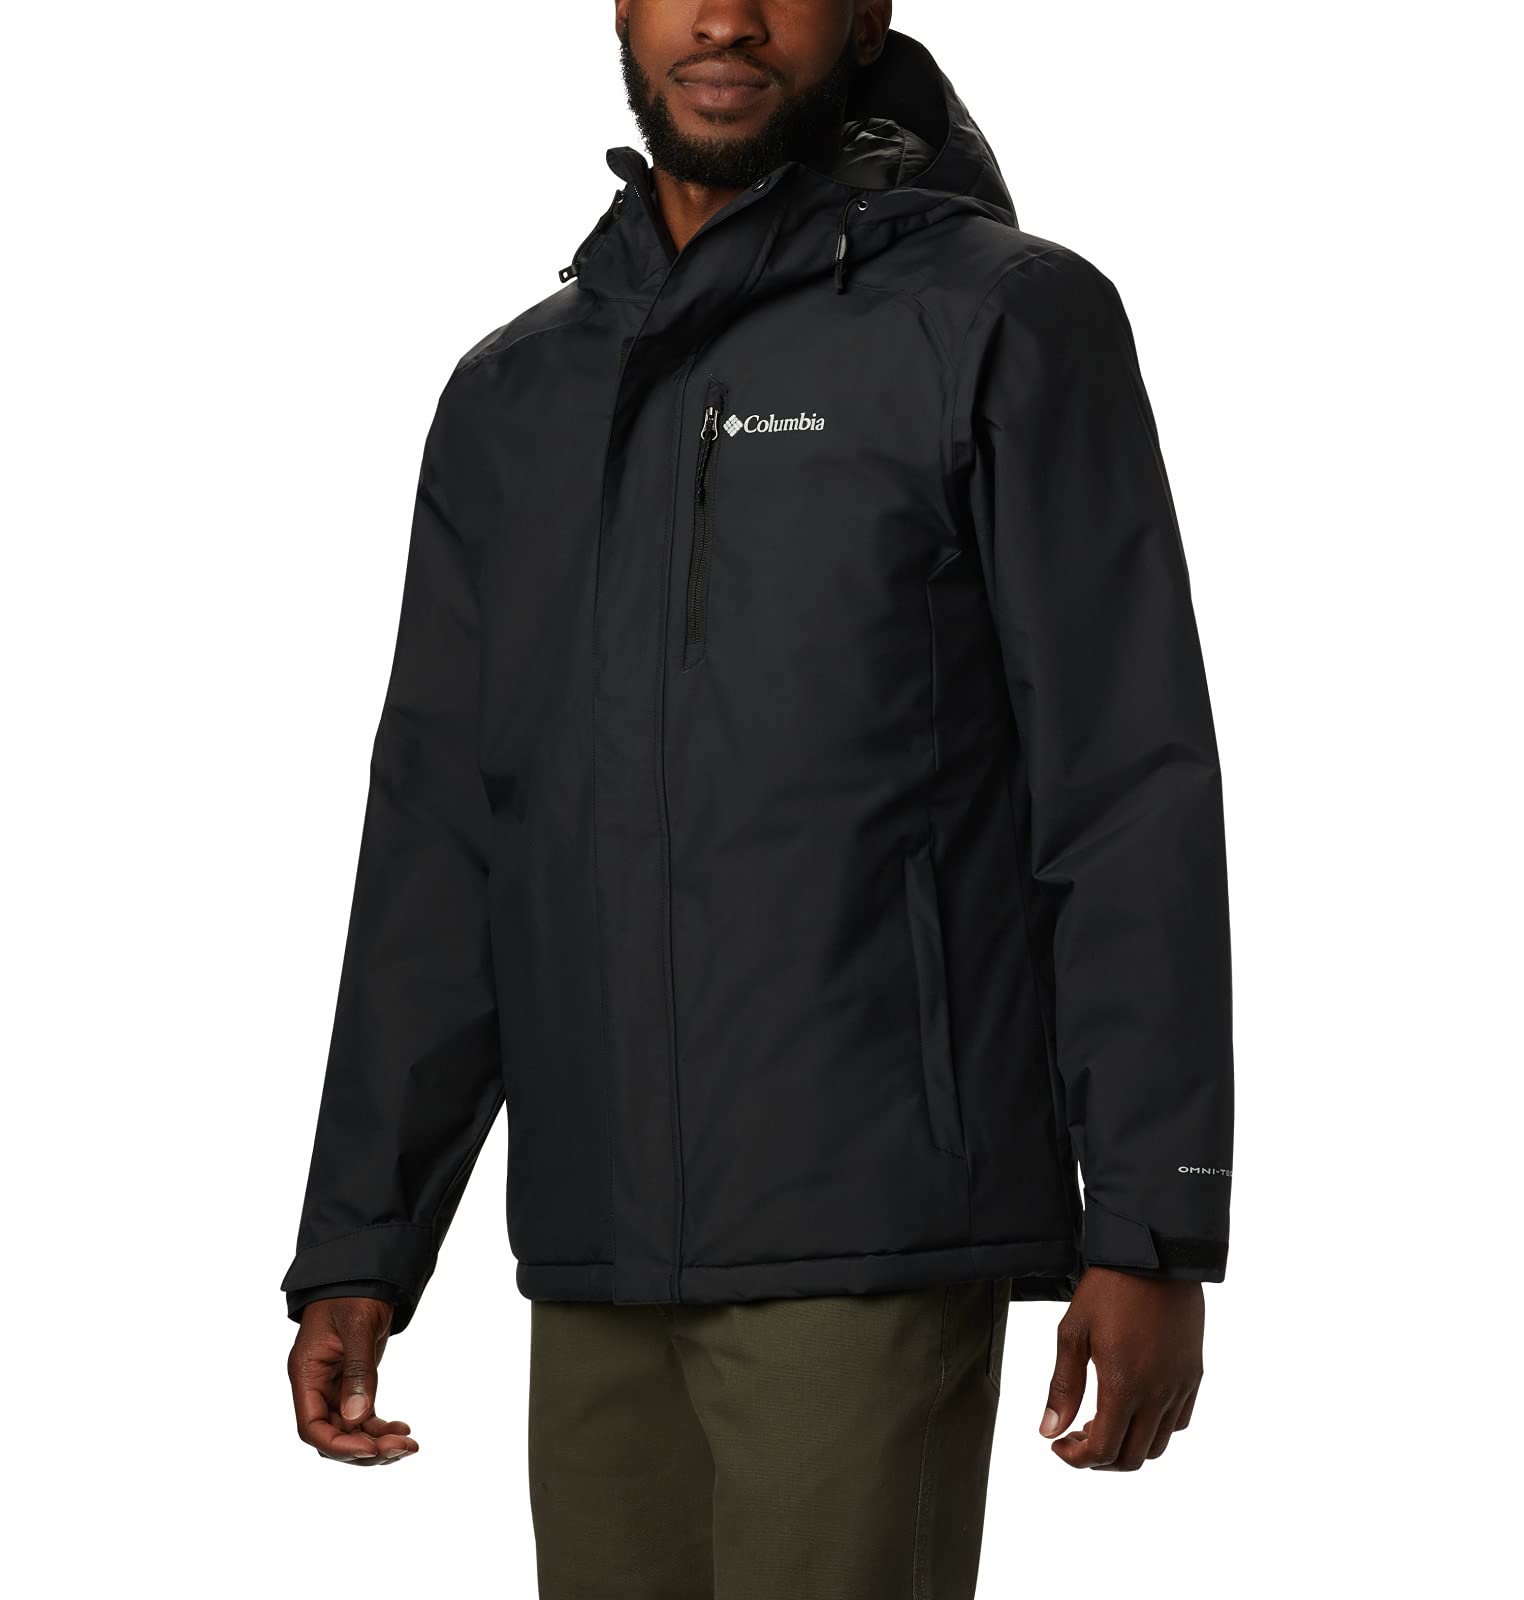 Columbia Men's Tipton Peak Insulated Jacket